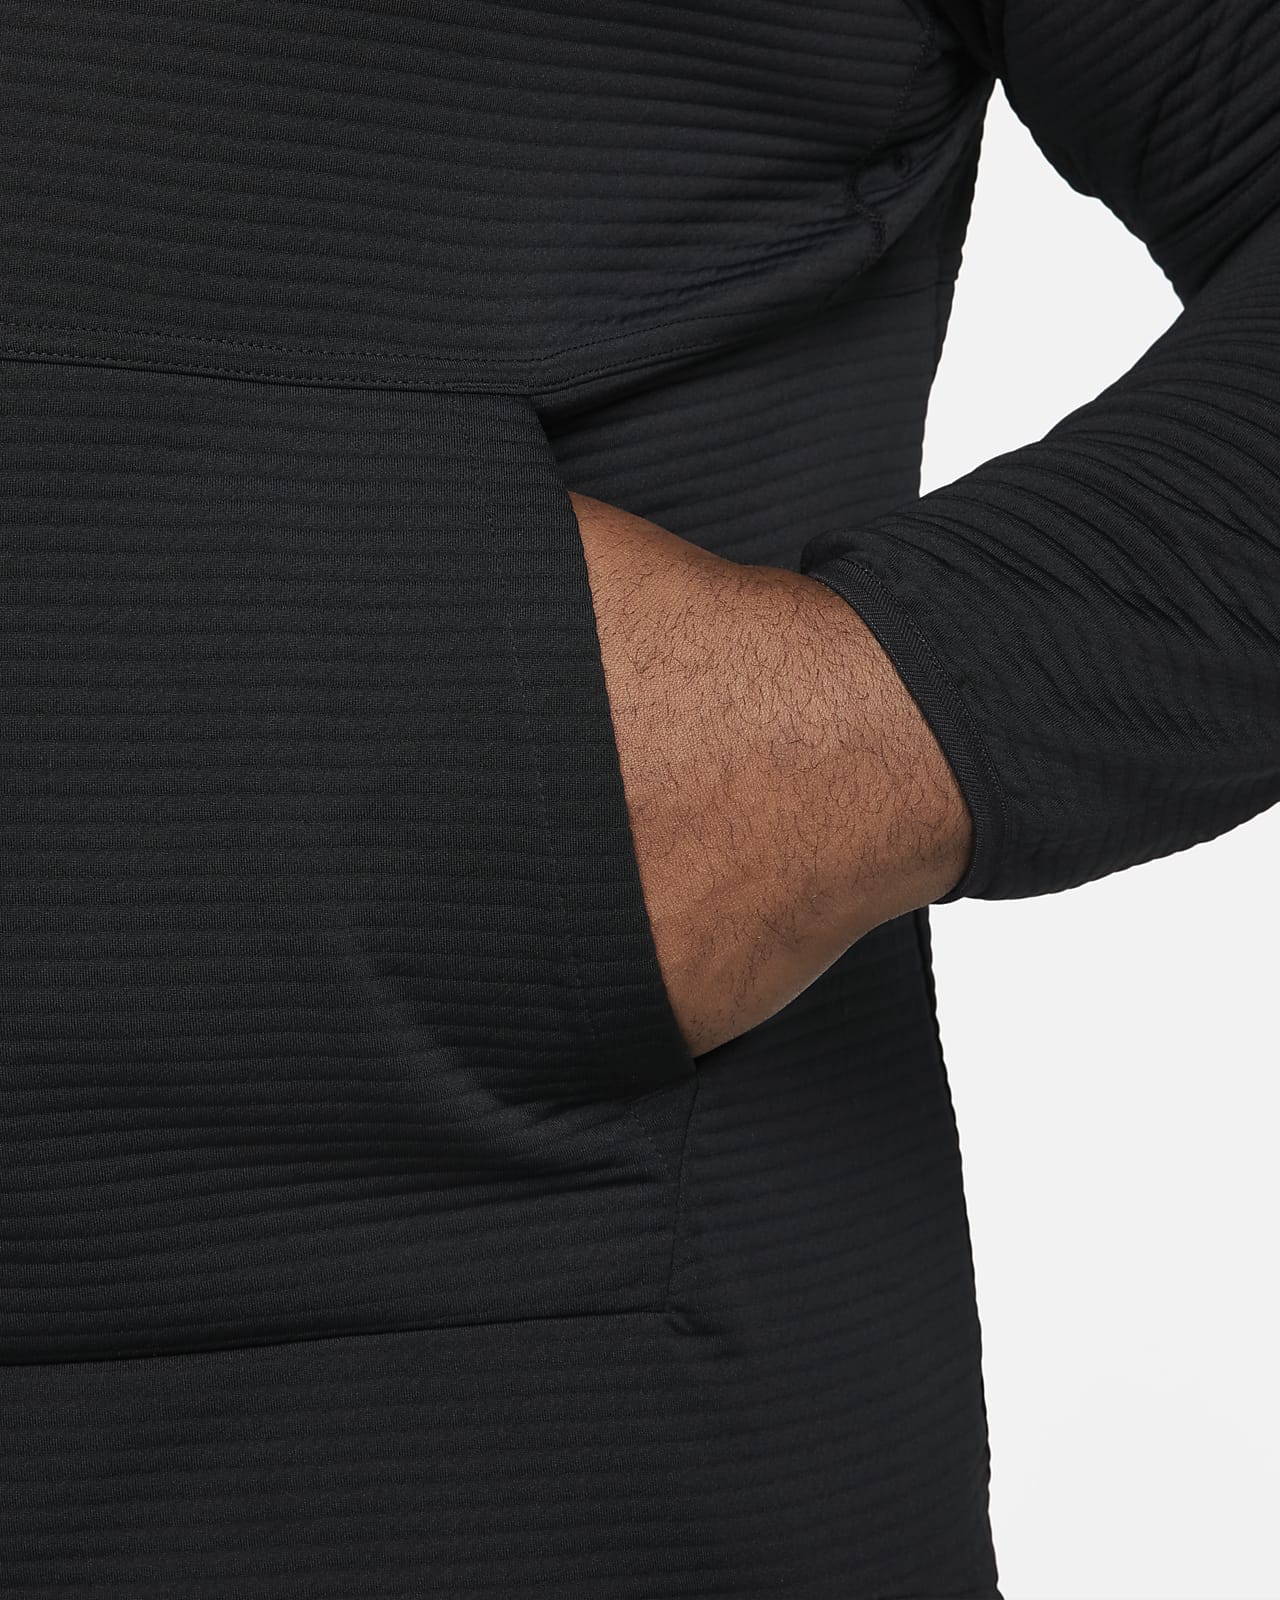 Nike Men's Dri-FIT Fleece Fitness Pullover